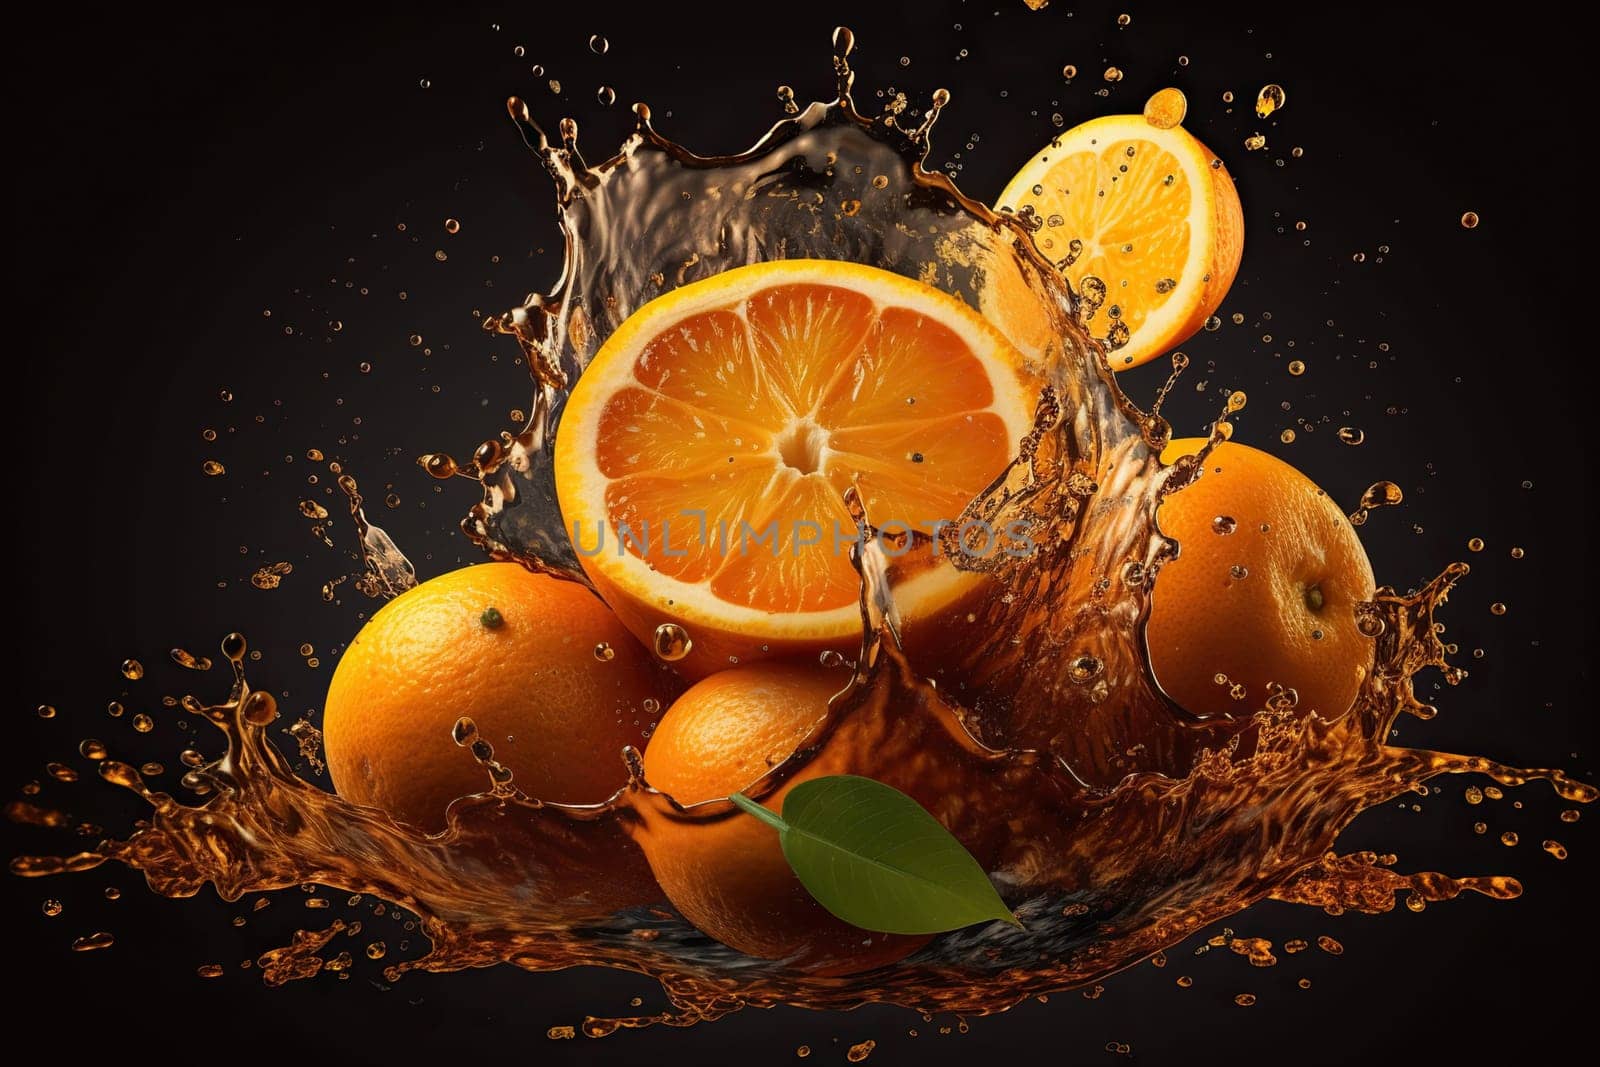 Fresh Oranges Splashing And Juice Droplets Flying by tan4ikk1